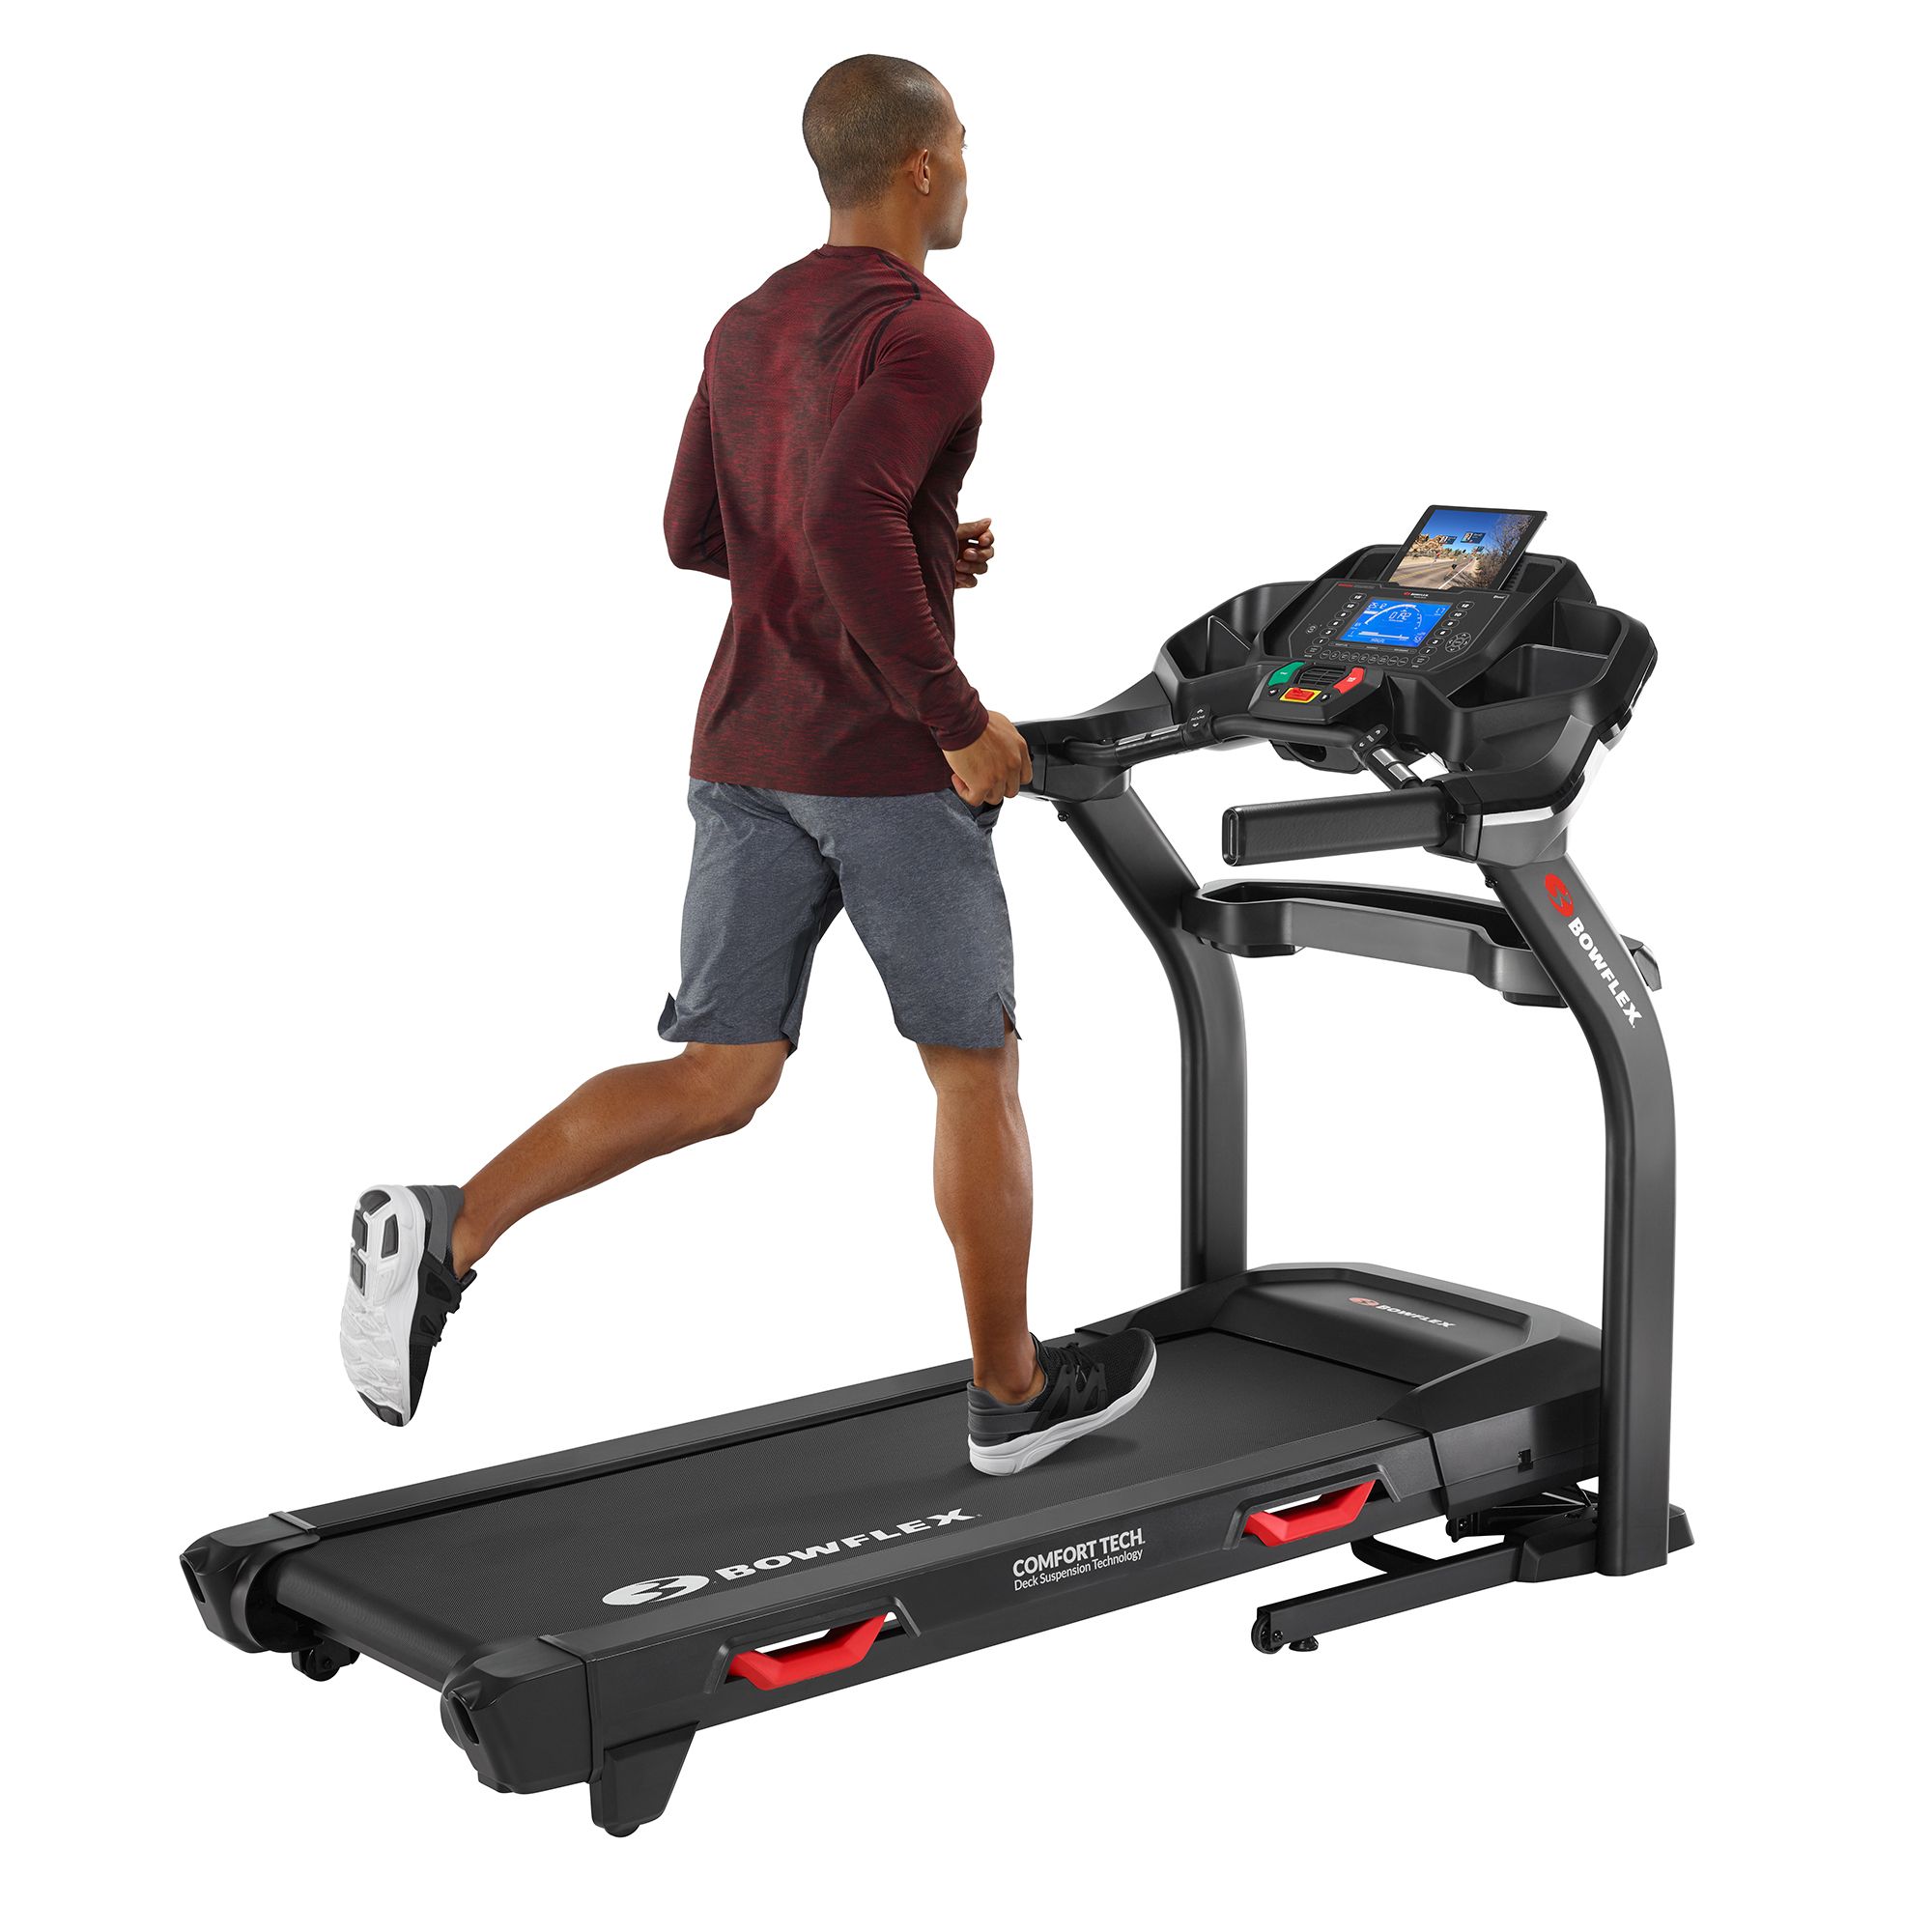 treadmill exercise machine